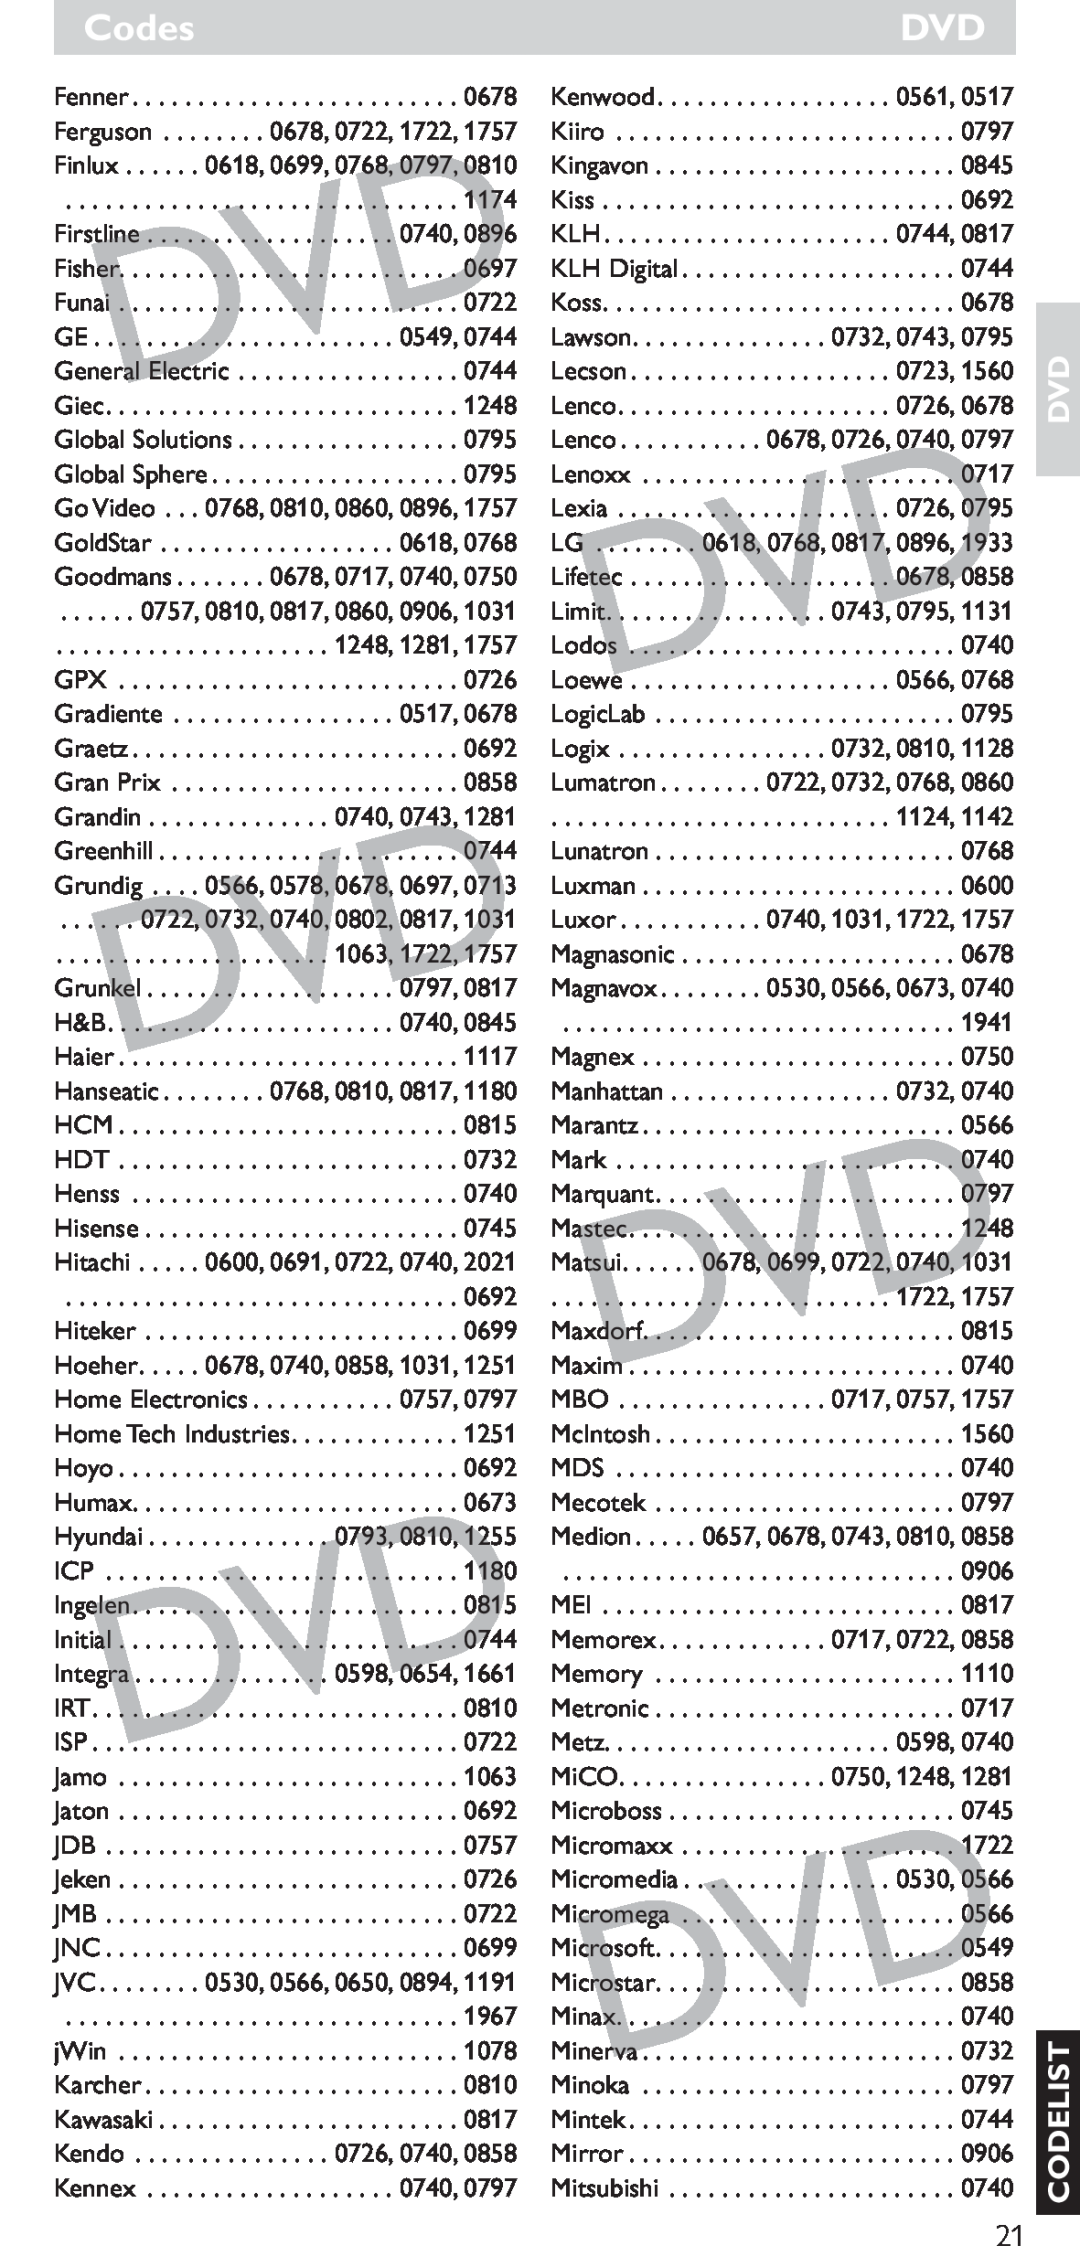 Hitachi SRU 5040/05 manual Codes, Dvd Codelist 